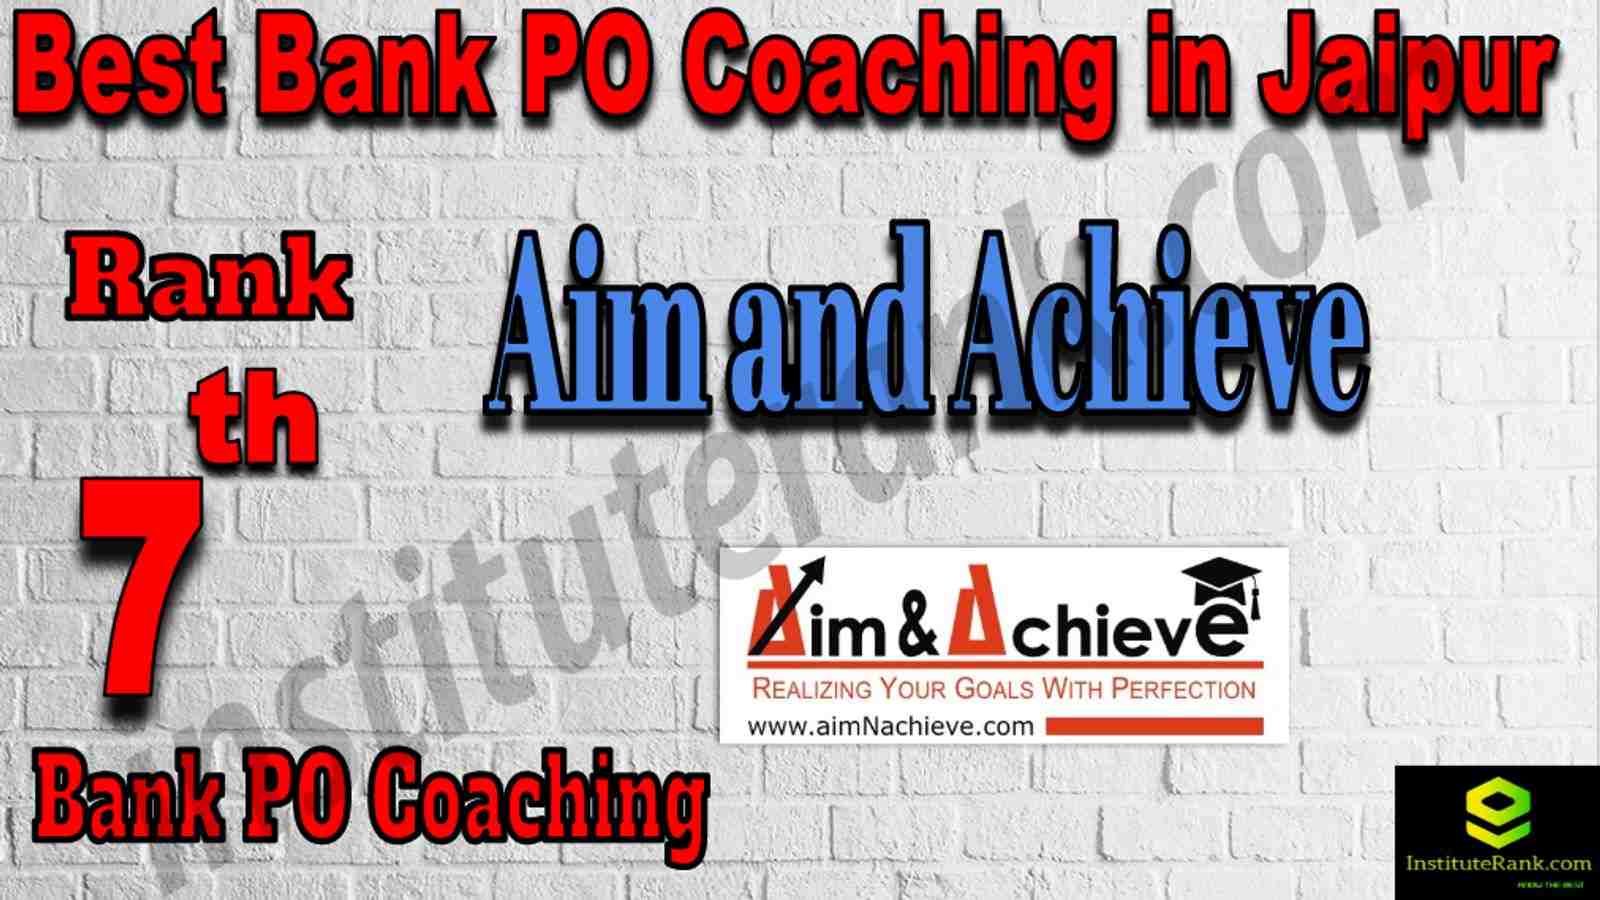 7th Best Bank PO Coaching in Jaipur